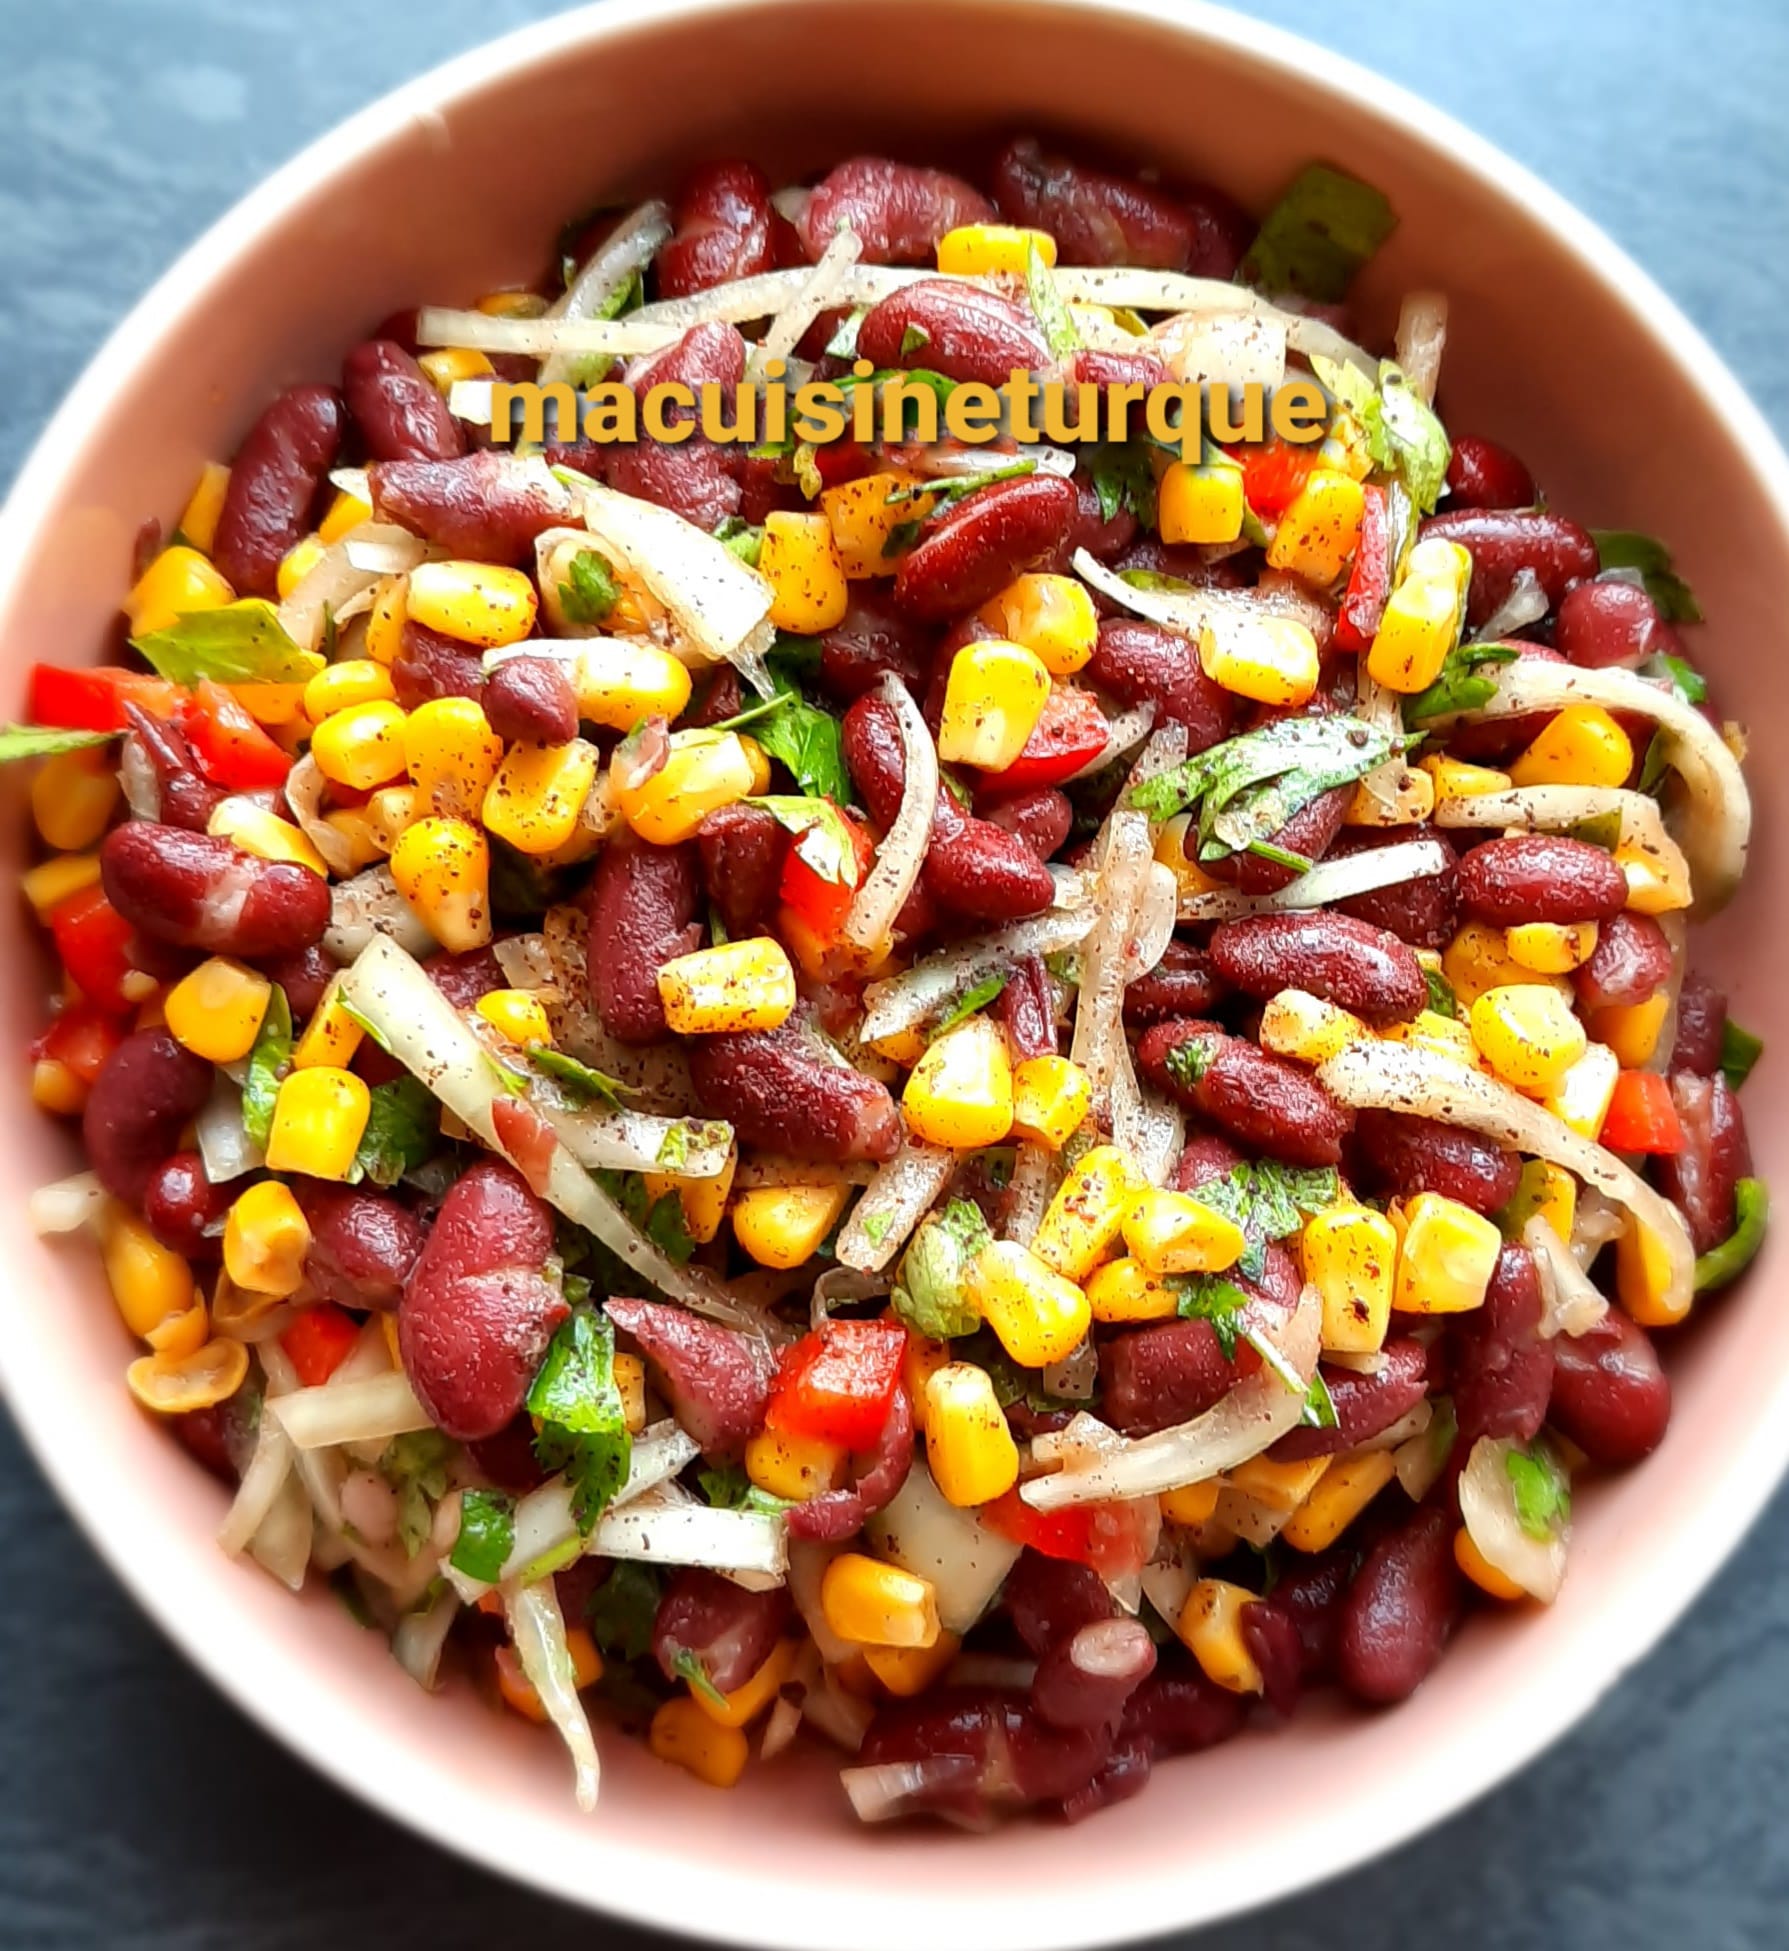 Salade de haricots rouges (kirmizi fasulye salatasi) - Ma Cuisine Turque